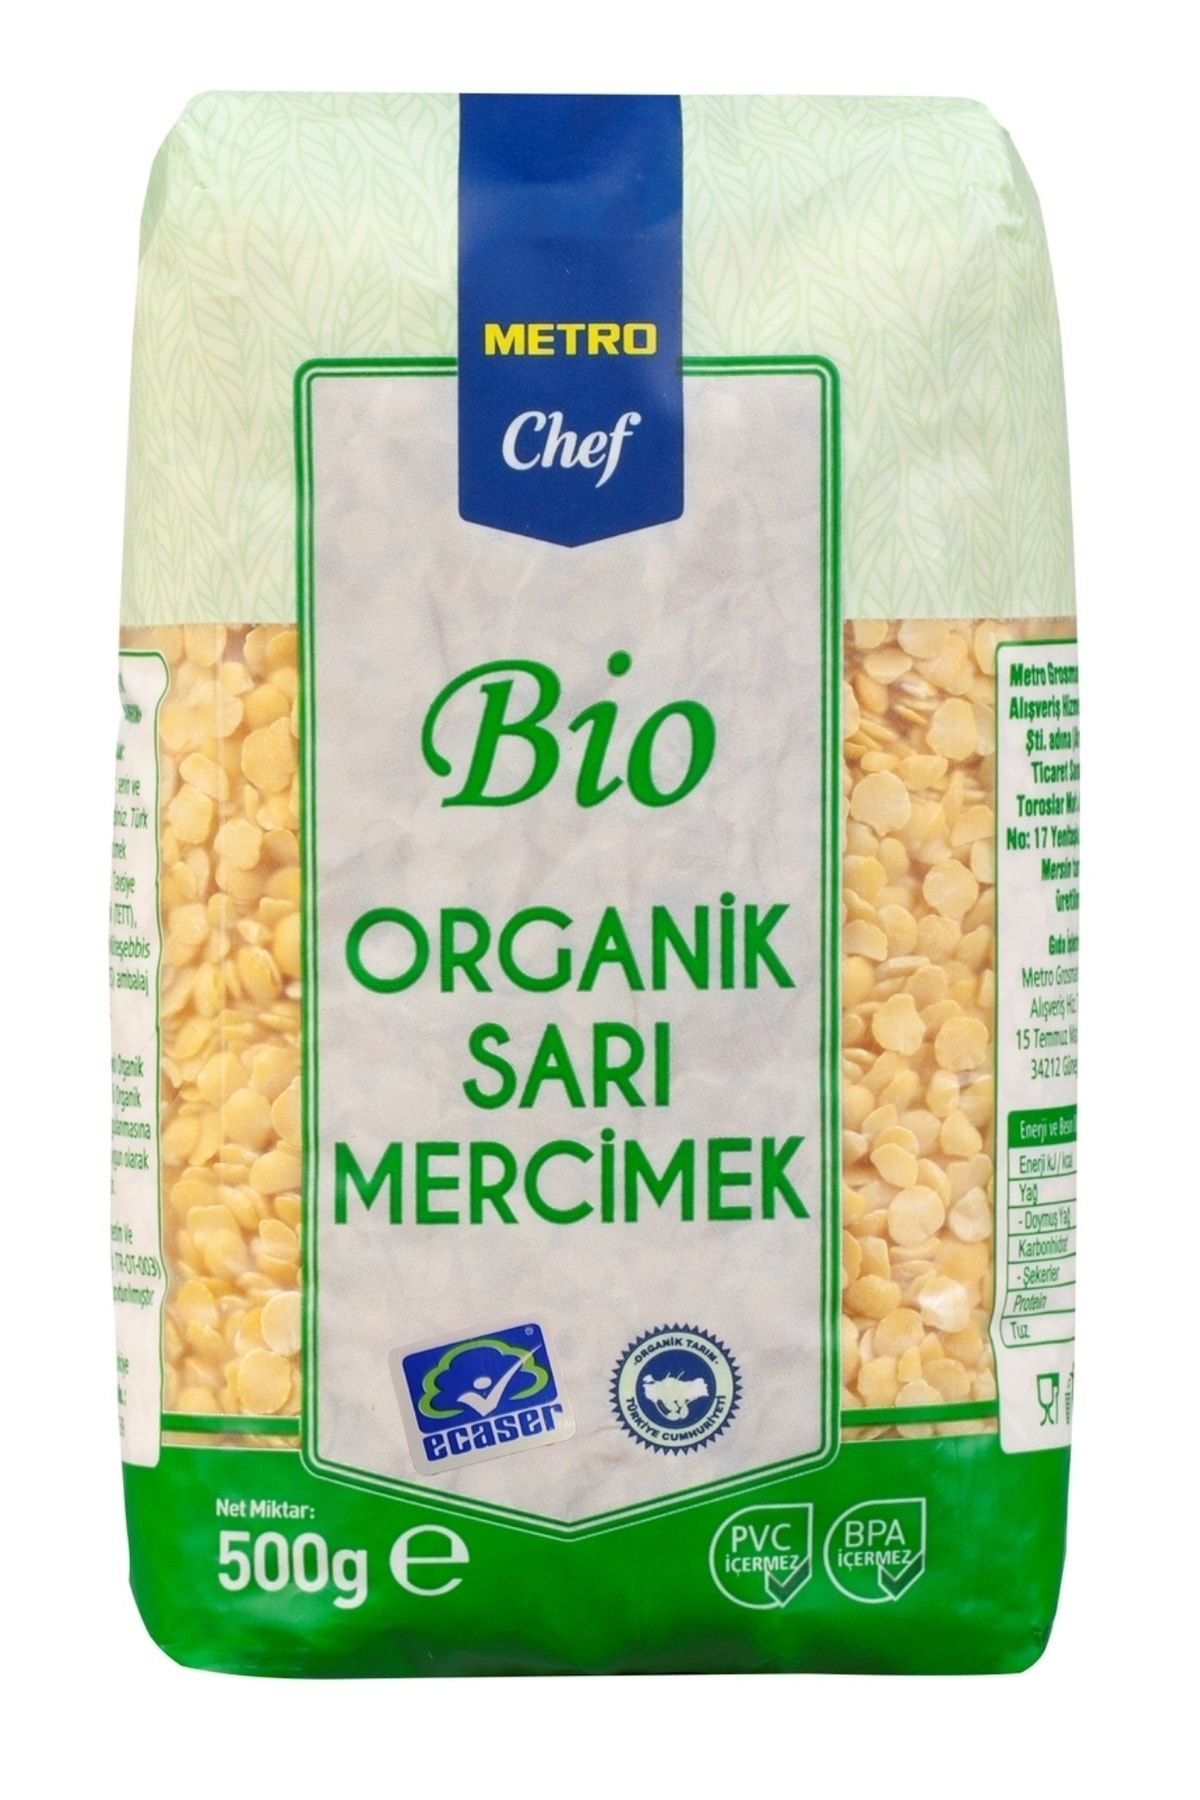 Metro Chef Bio Organik Sari Mercimek 500g